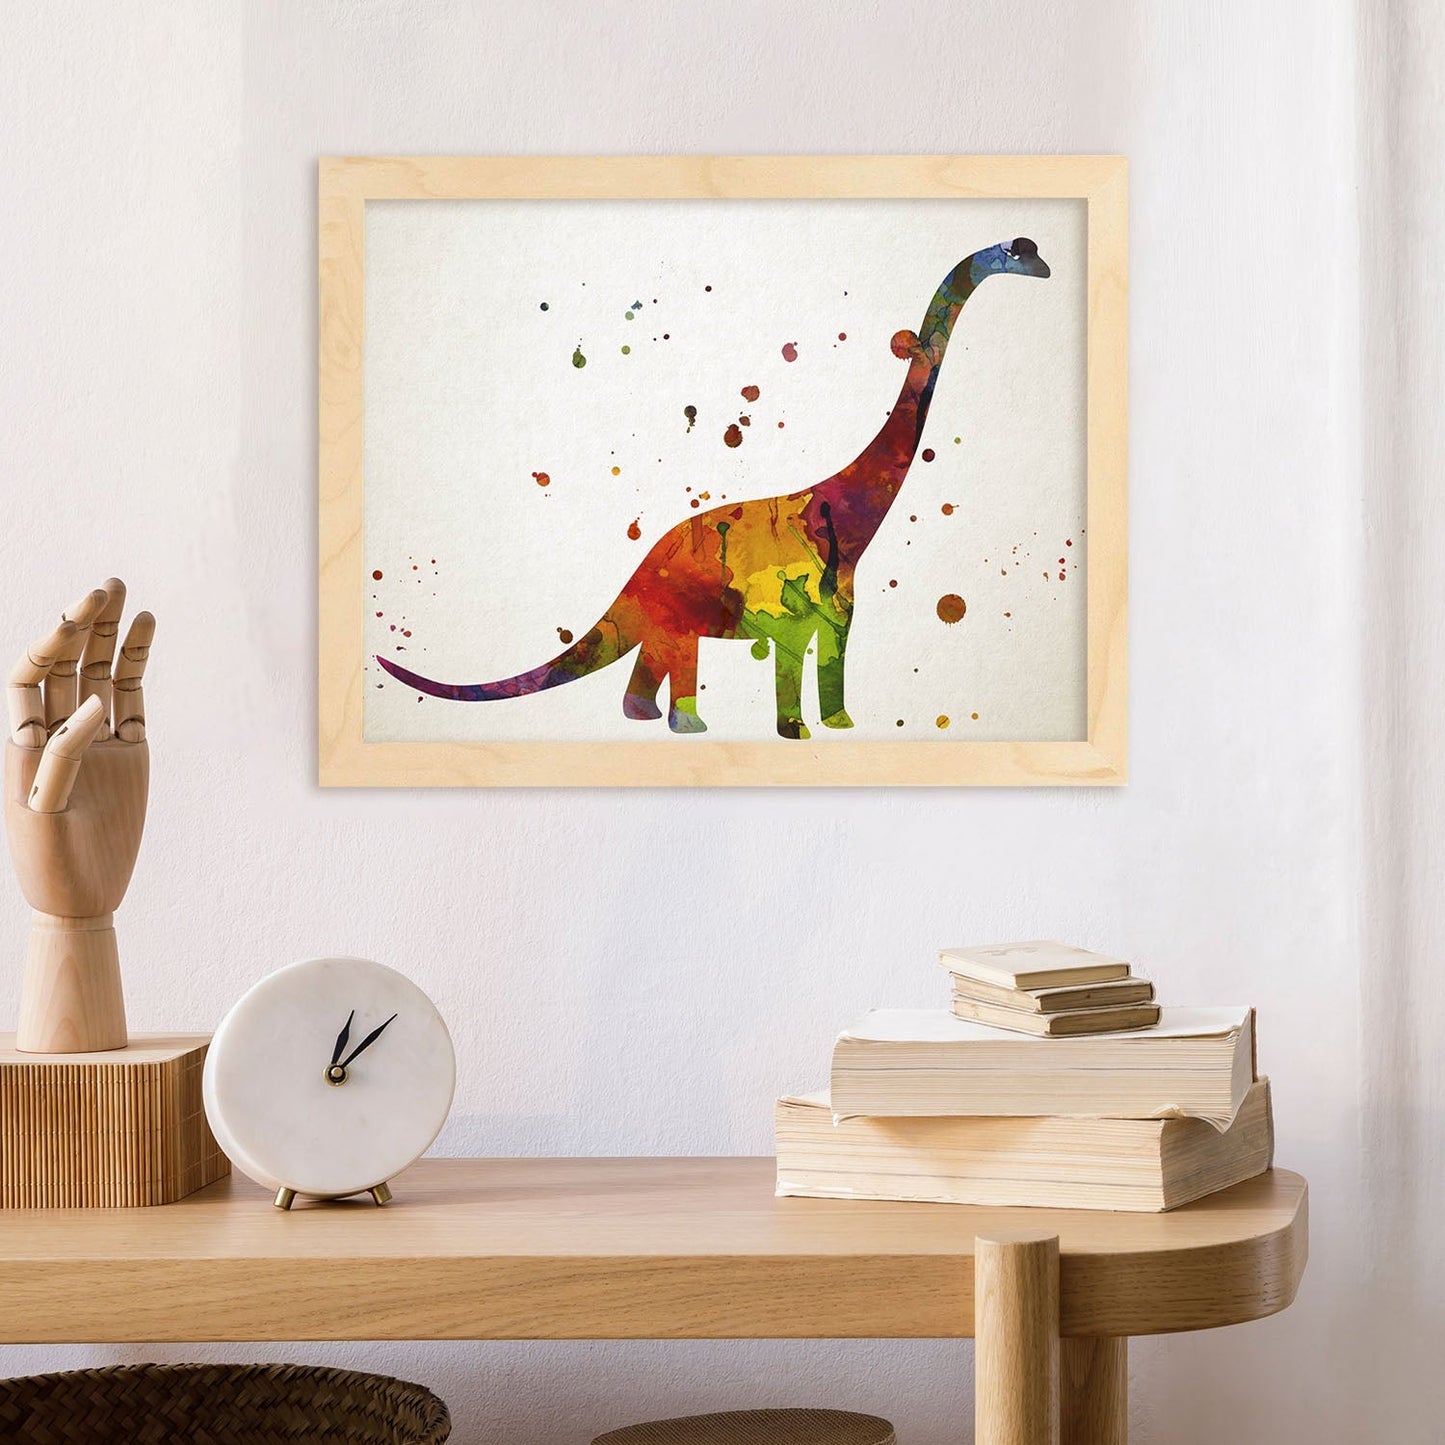 Poster de Brontosaurio estilo acuarela. Láminas de animales con estilo acuarela-Artwork-Nacnic-Nacnic Estudio SL